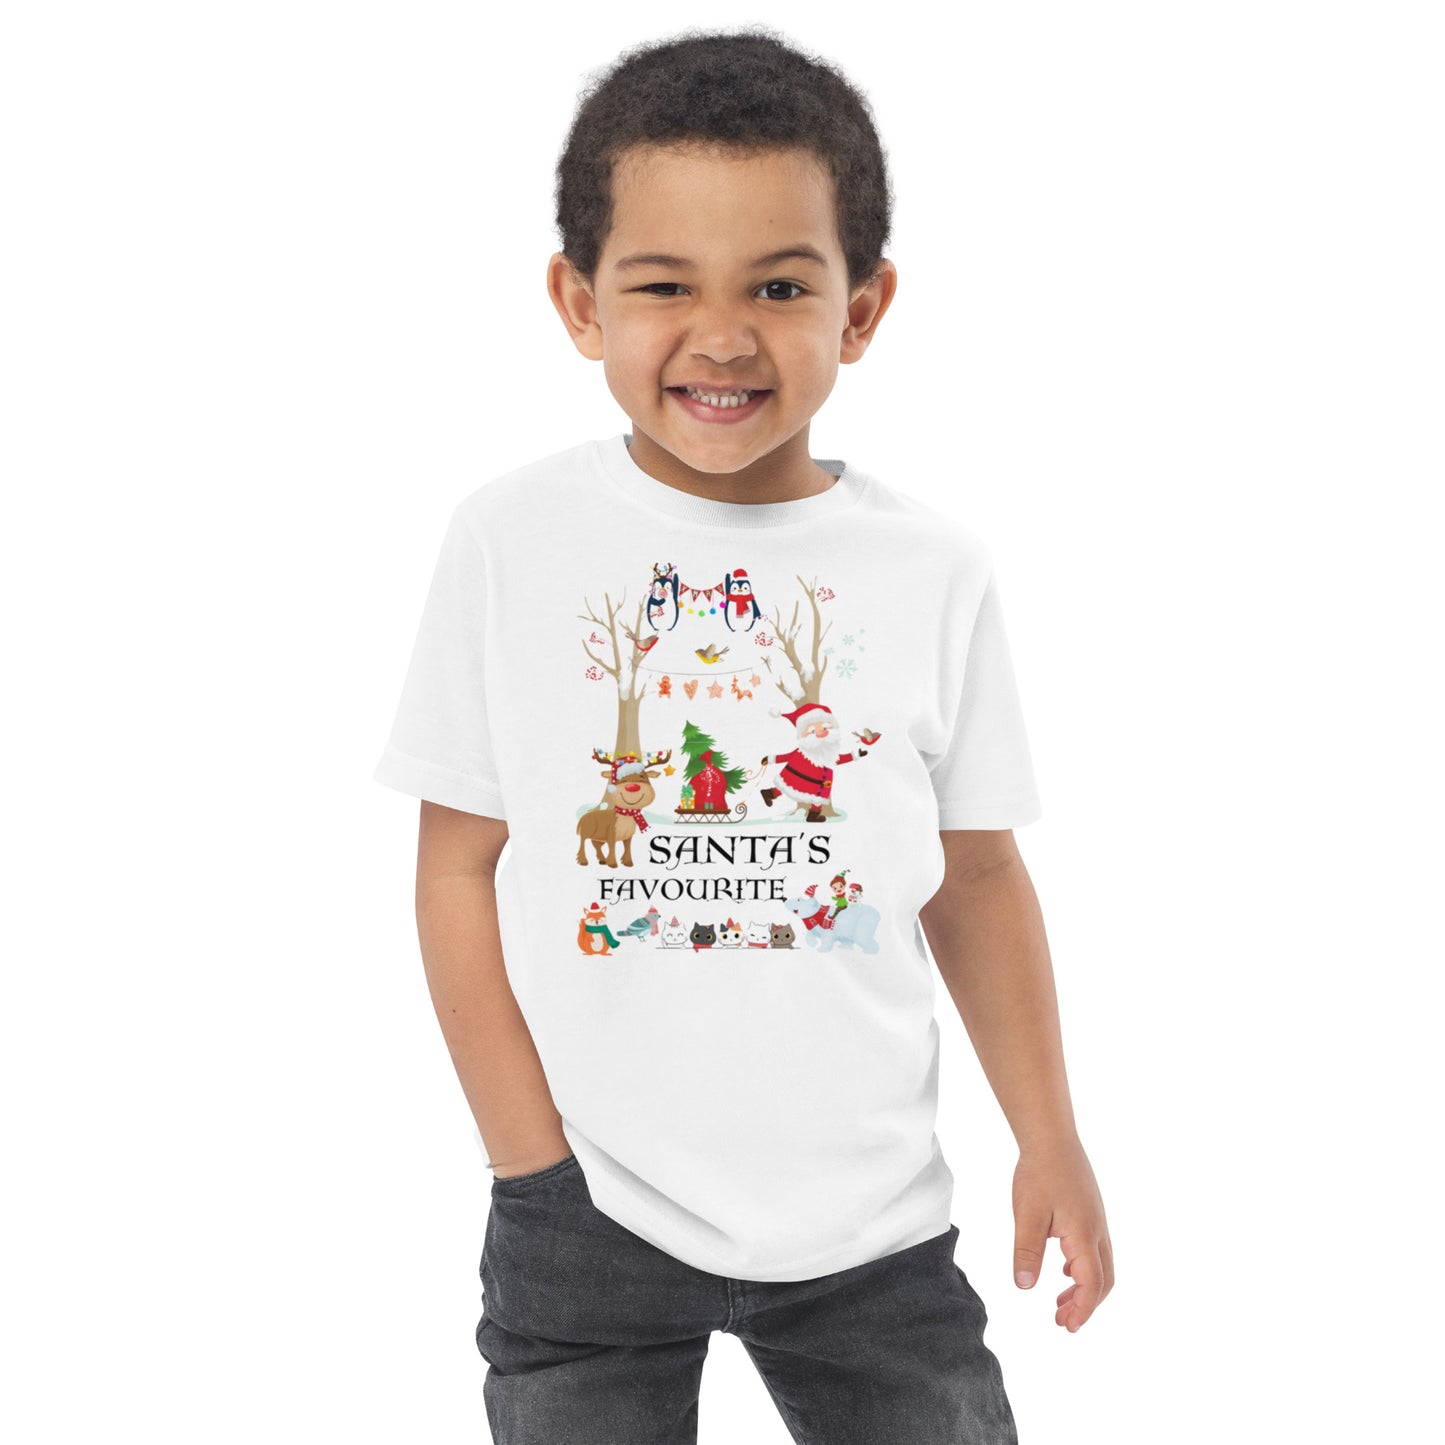 Santa's Fav Toddler jersey t-shirt